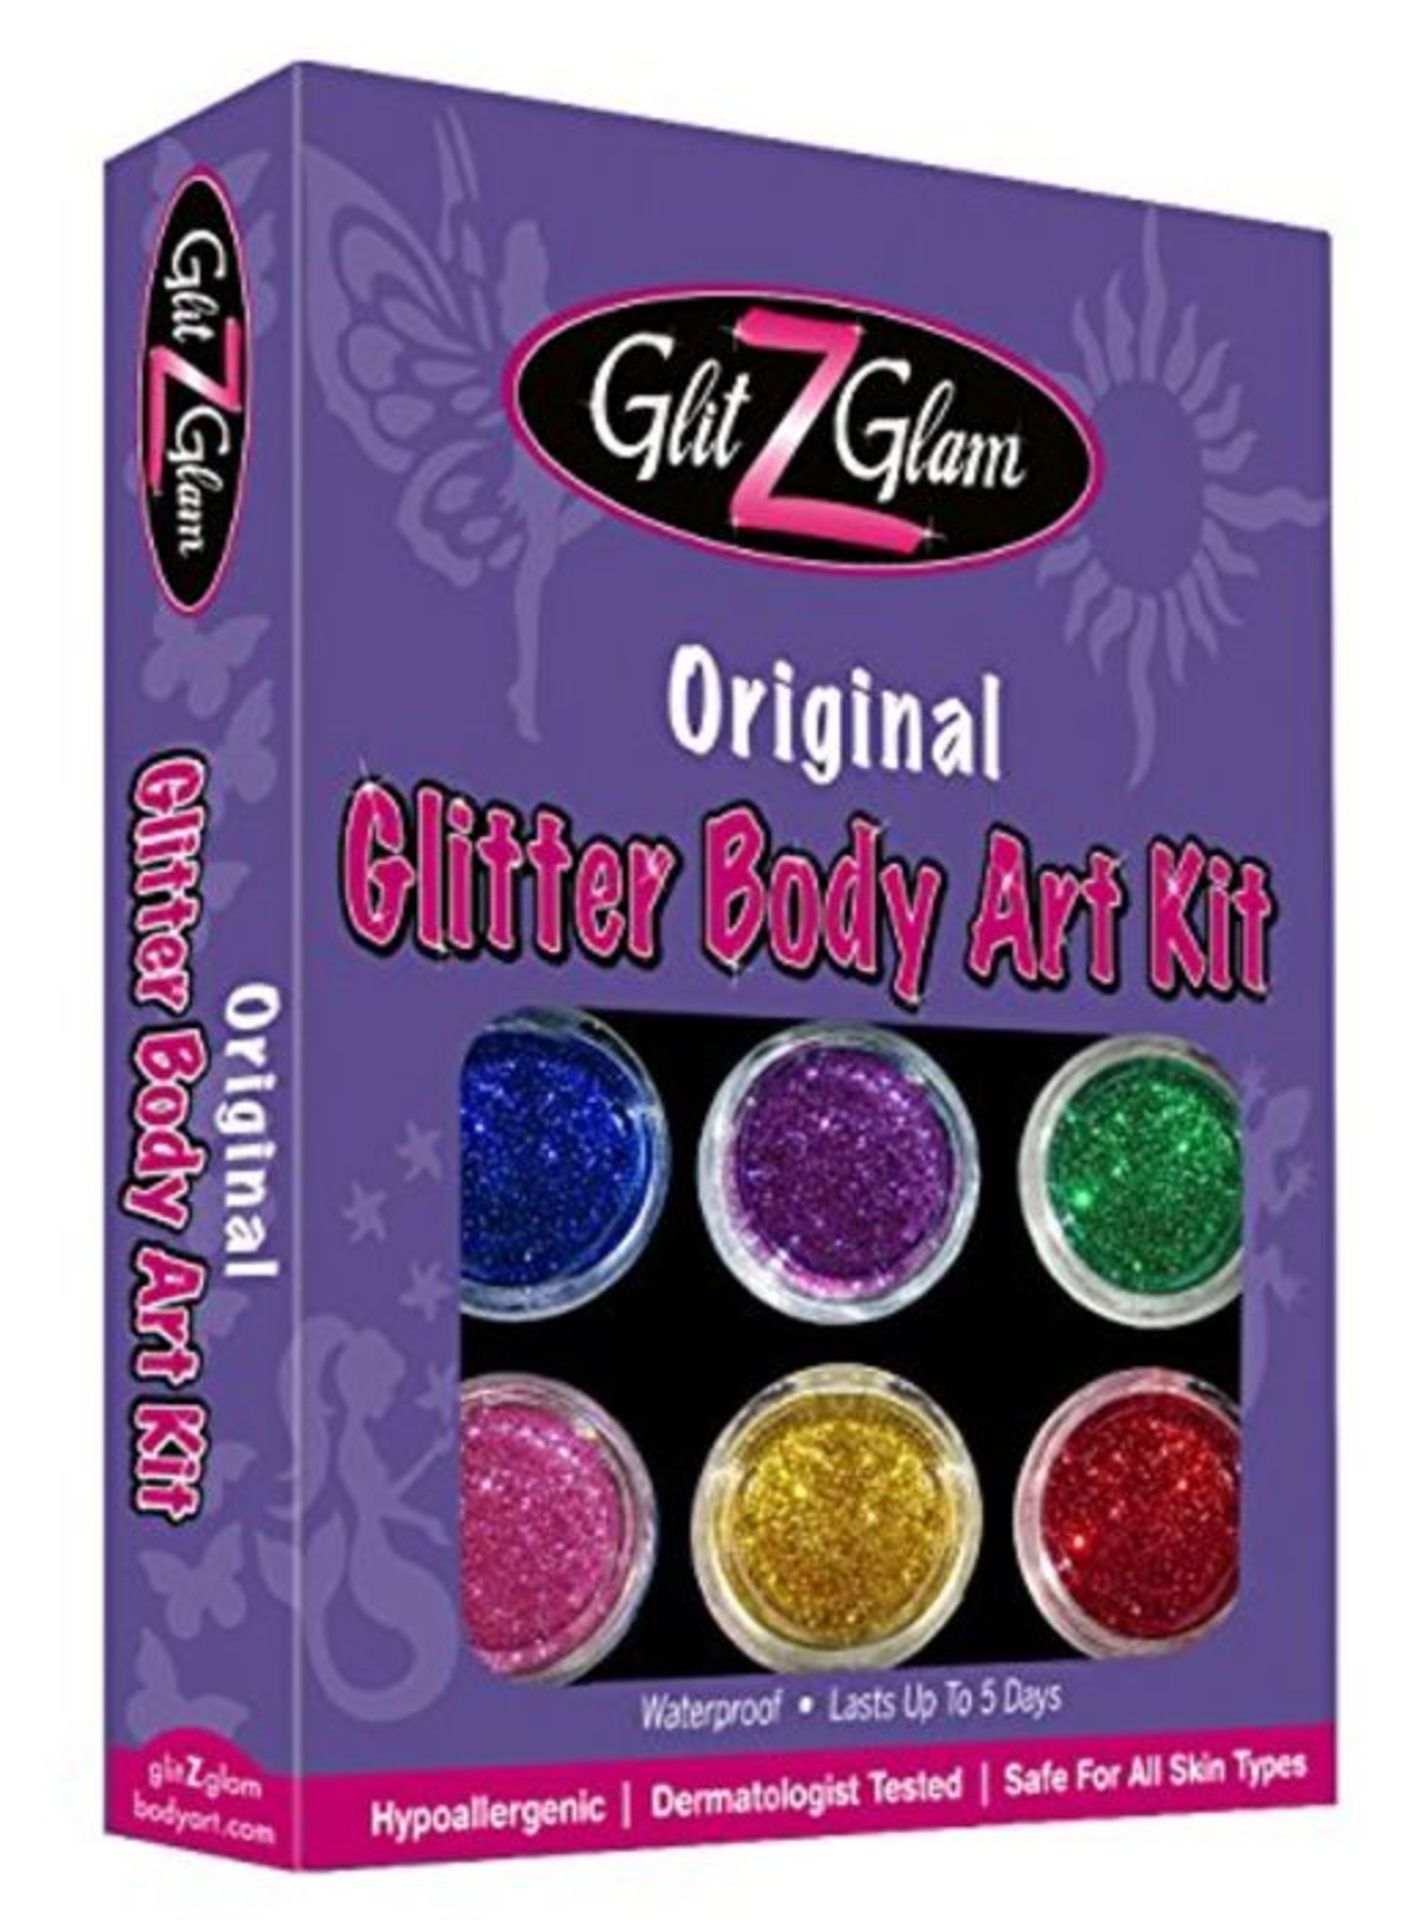 GlitZGlam Original Glitter Tattoo Kit and Temporary Tattoos - HYPOALLERGENIC and DERMA